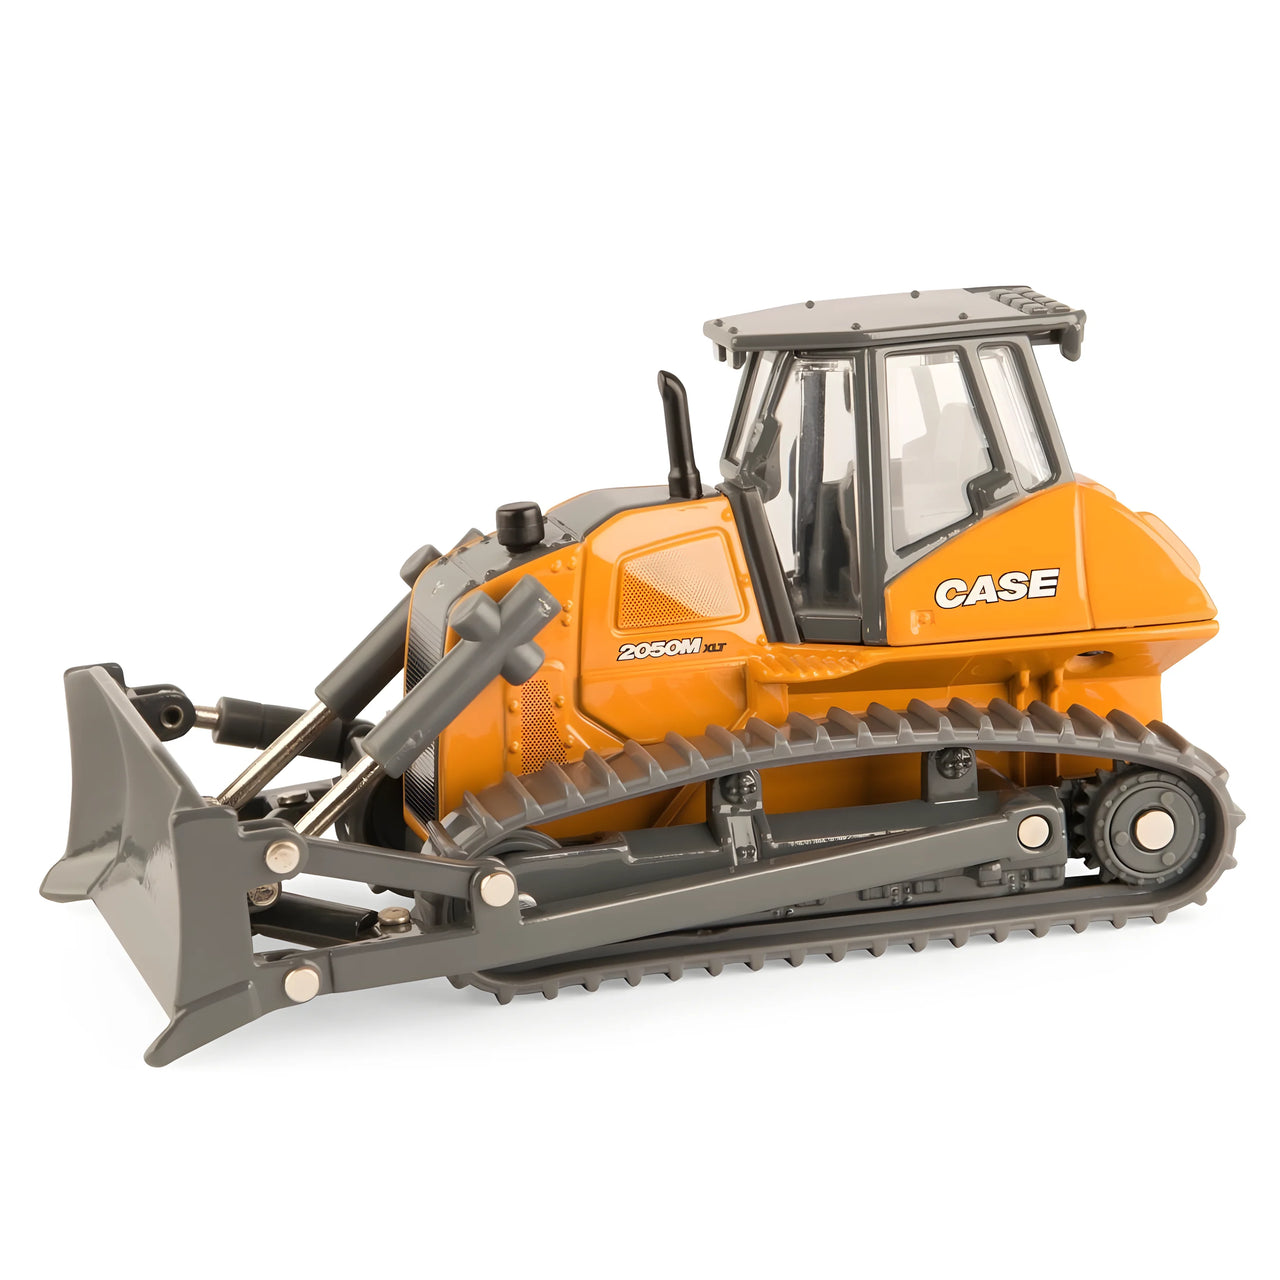 14914 Case 2050M Crawler Tractor Scale 1:50